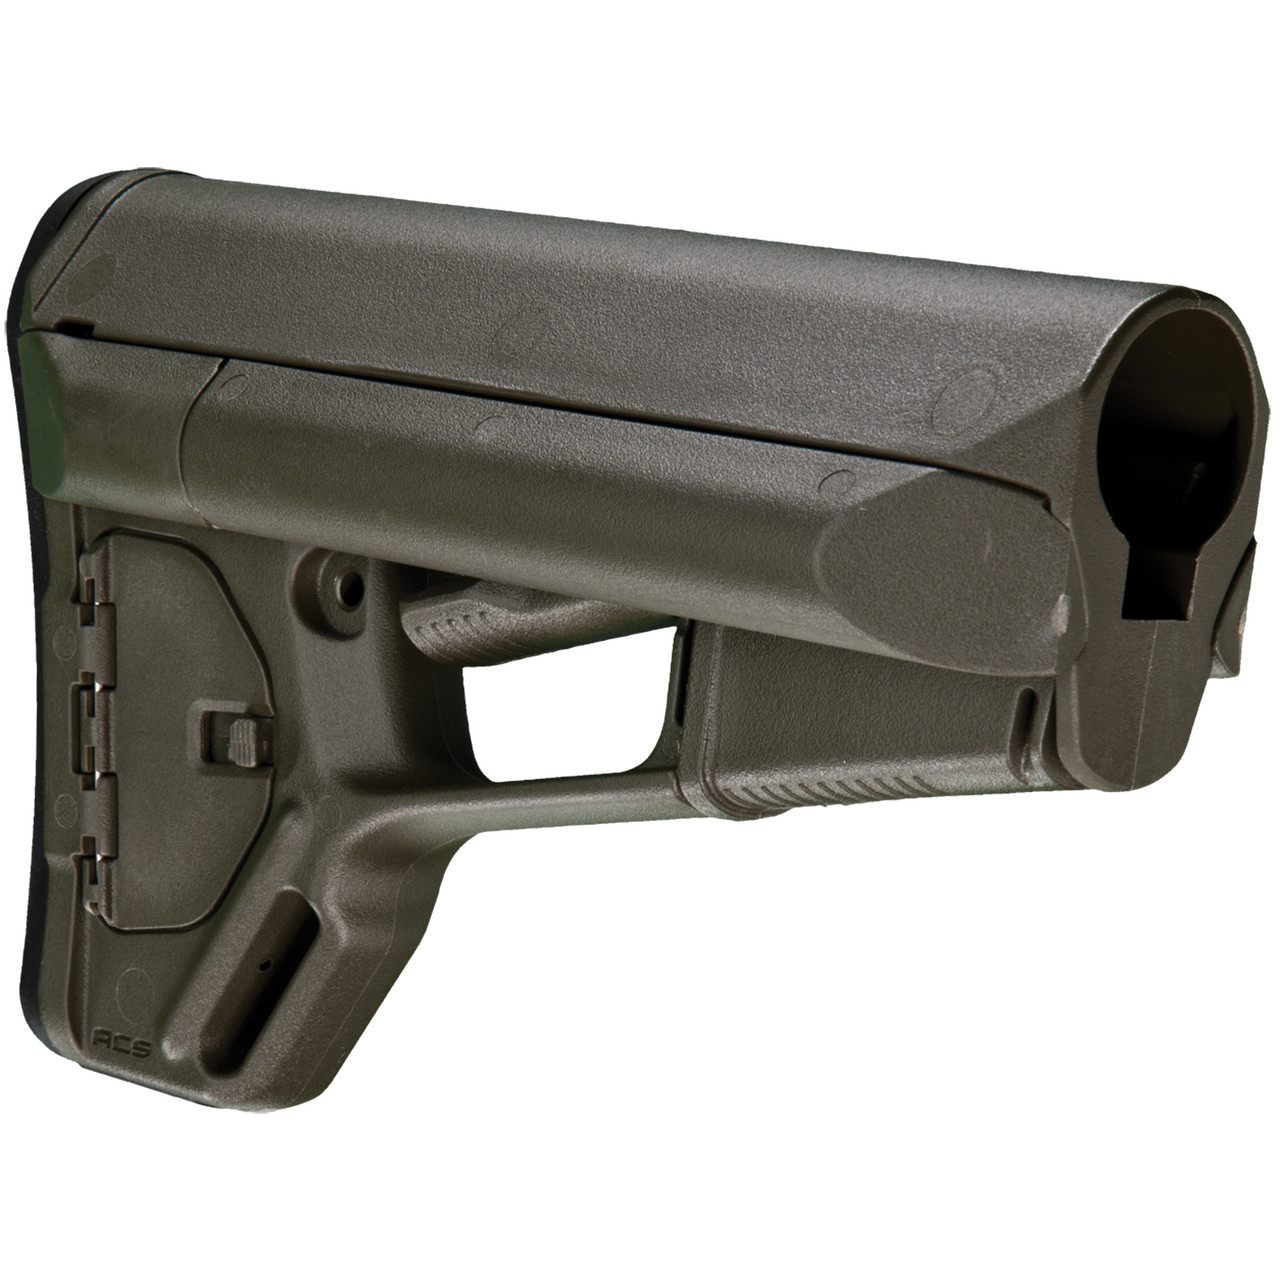 Magpul ACS (Adaptable Carbine/Storage) Stock - ODG